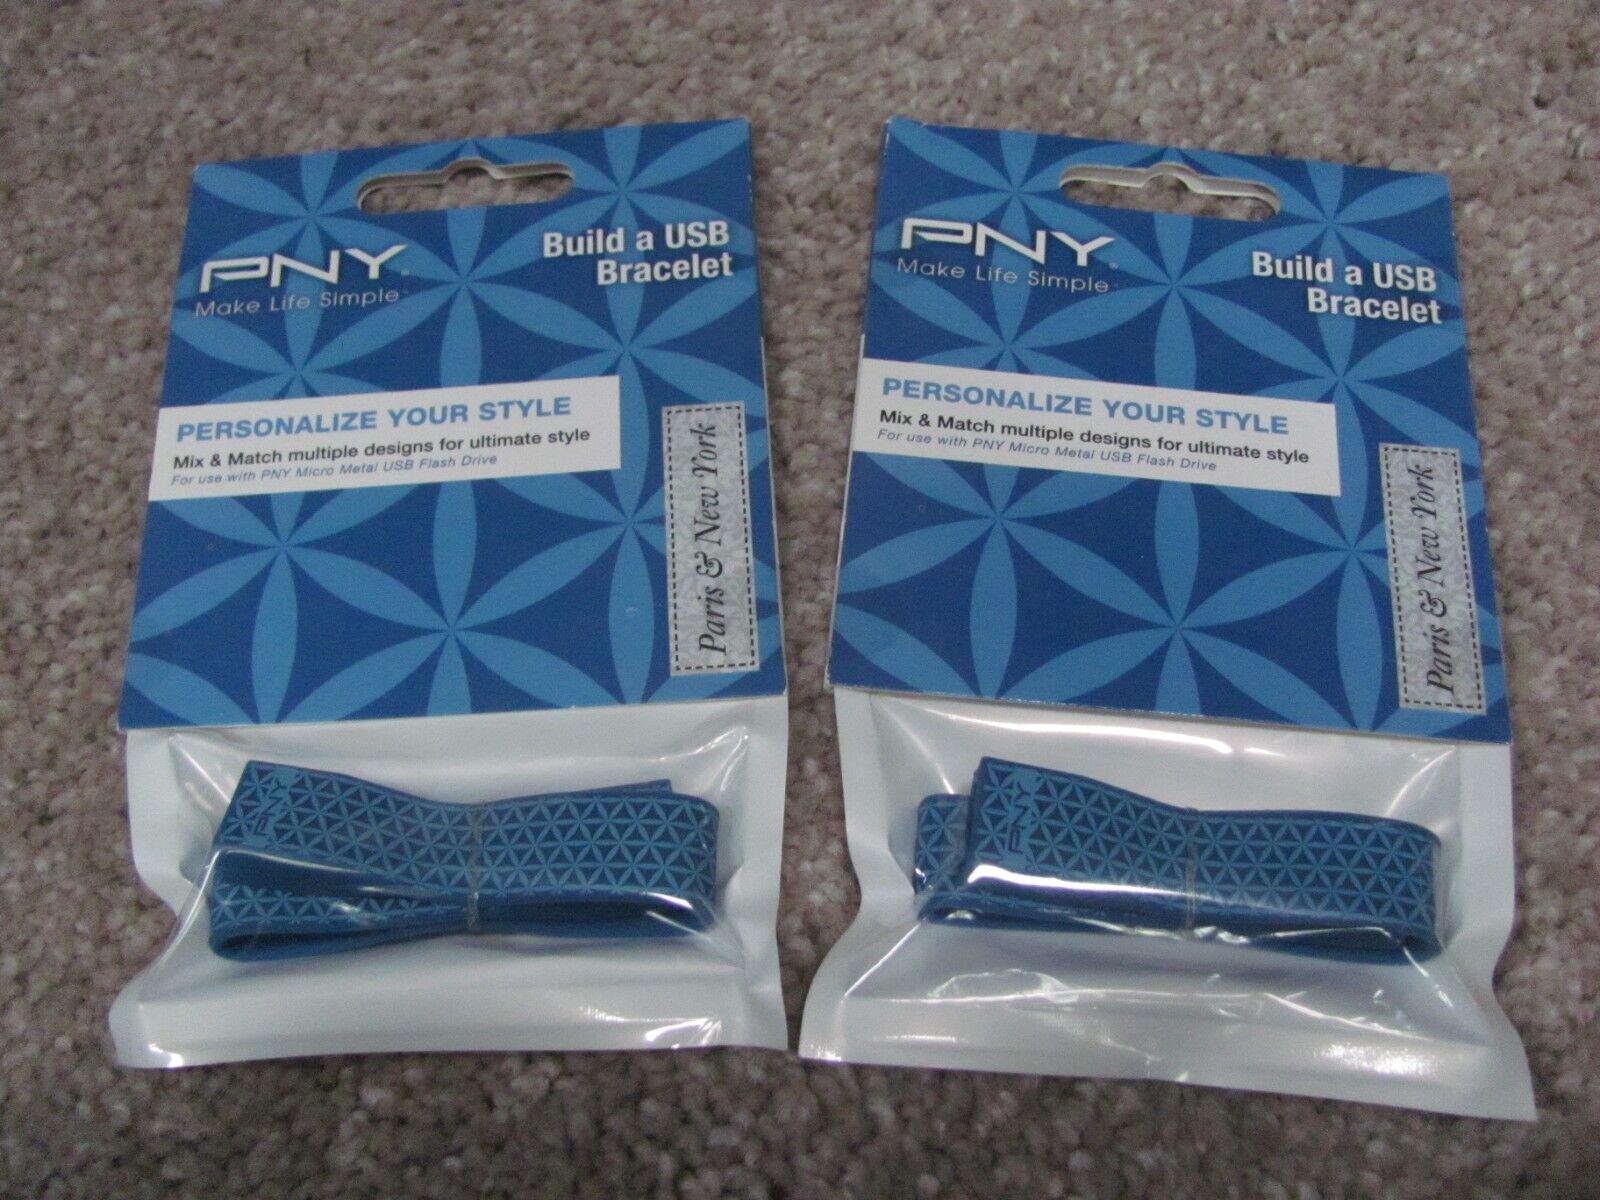 Lot of 2 PNY Build a USB Bracelet For use PNY Micro Metal USB Flash Drive Blue